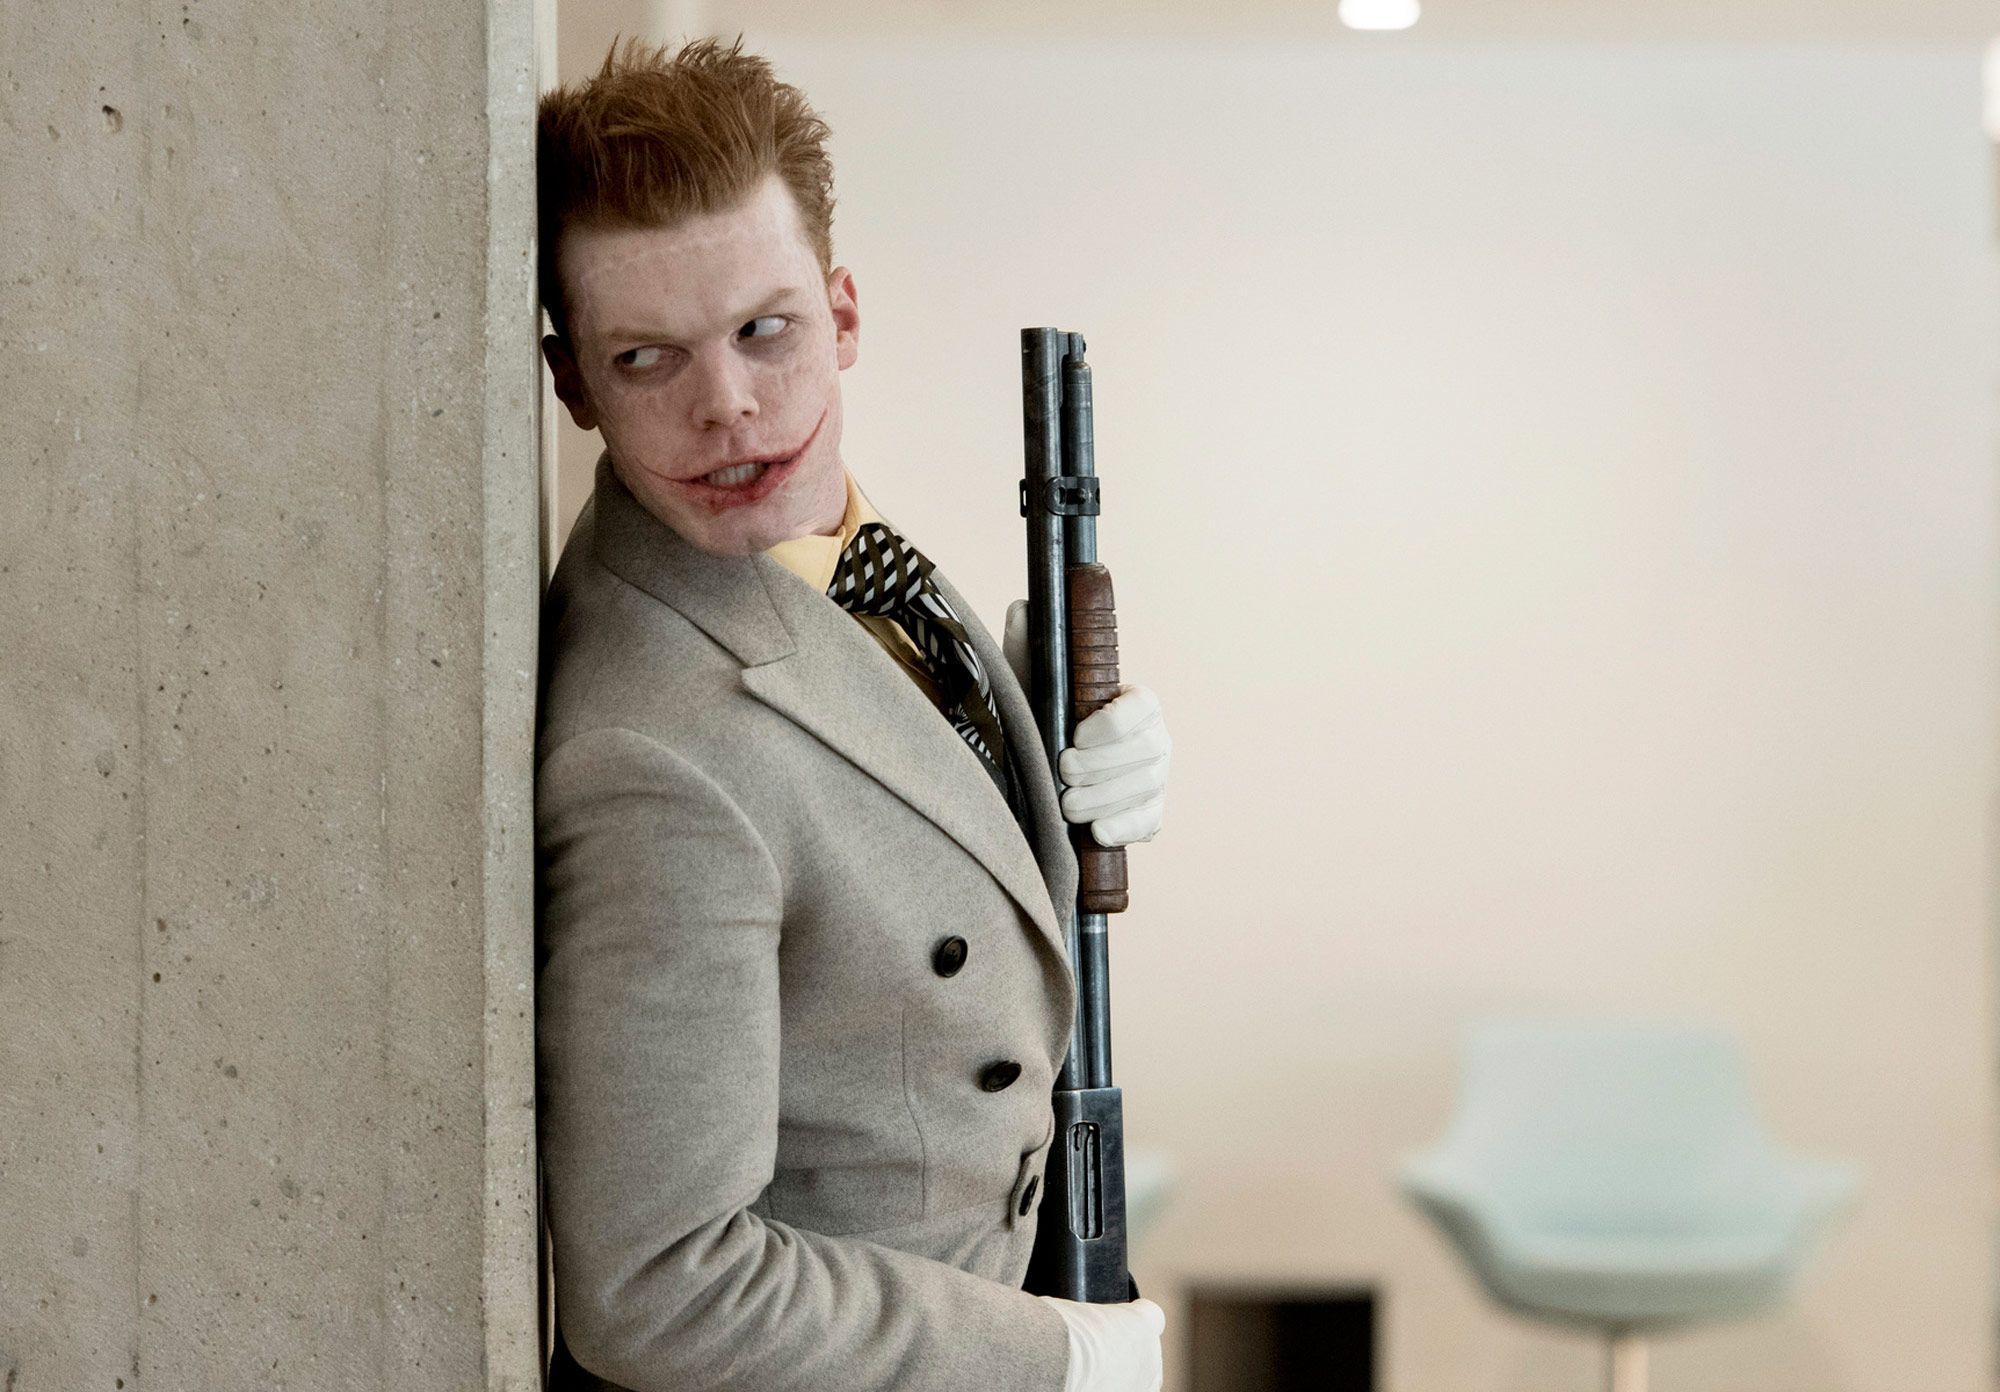 Gotham season 1 episodes online - profkasap